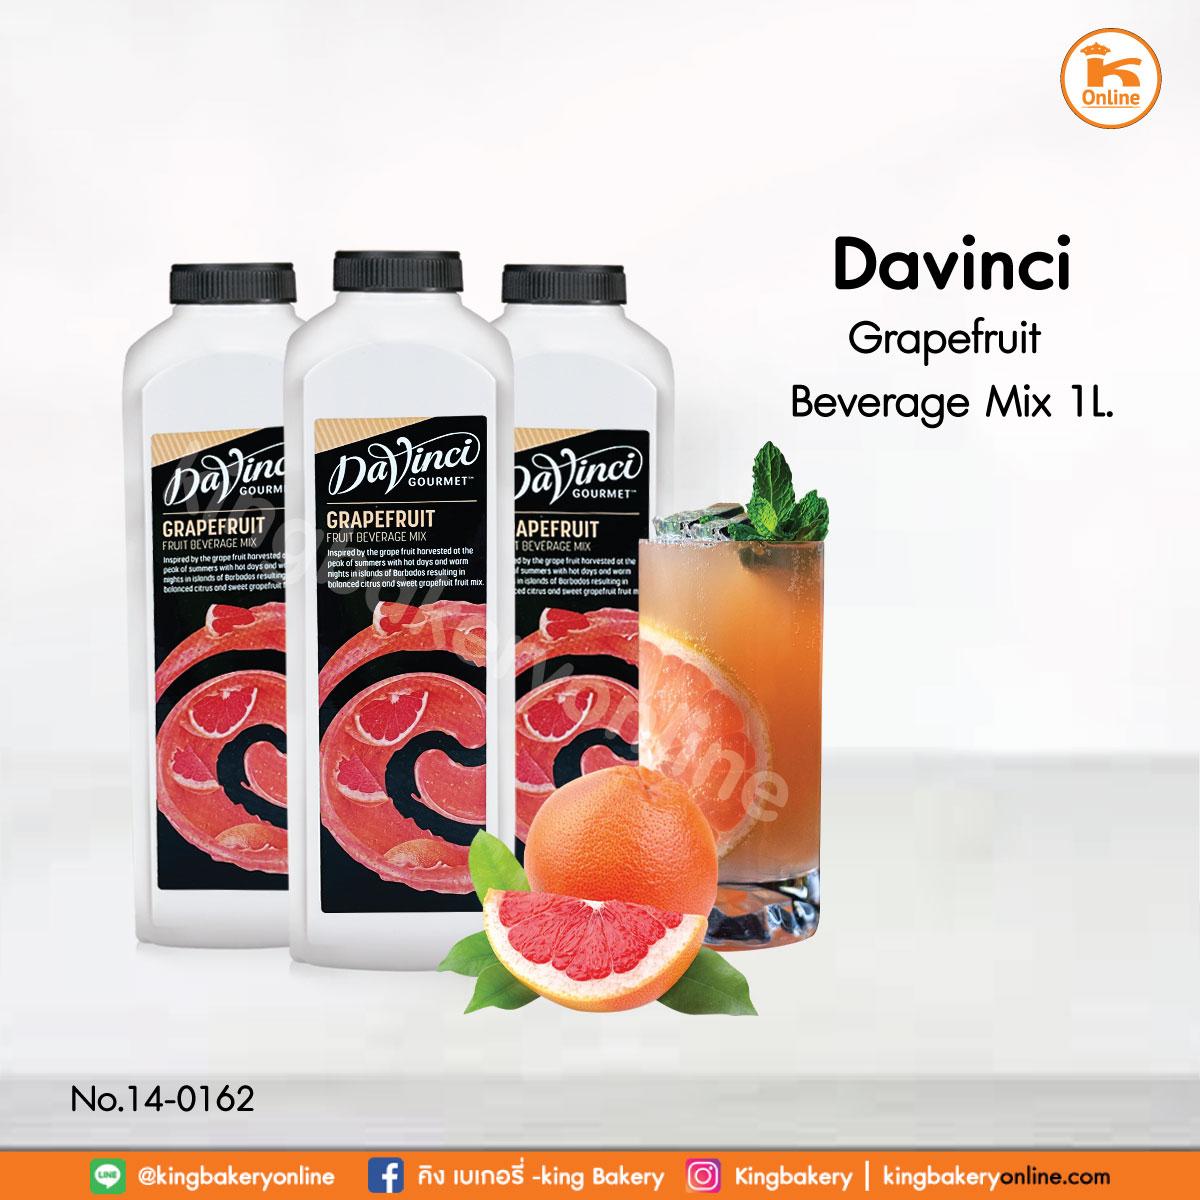 F Davinci Grapefruit Beverage Mix 1L. (1ลังx6ขวด) ดาวินชี่